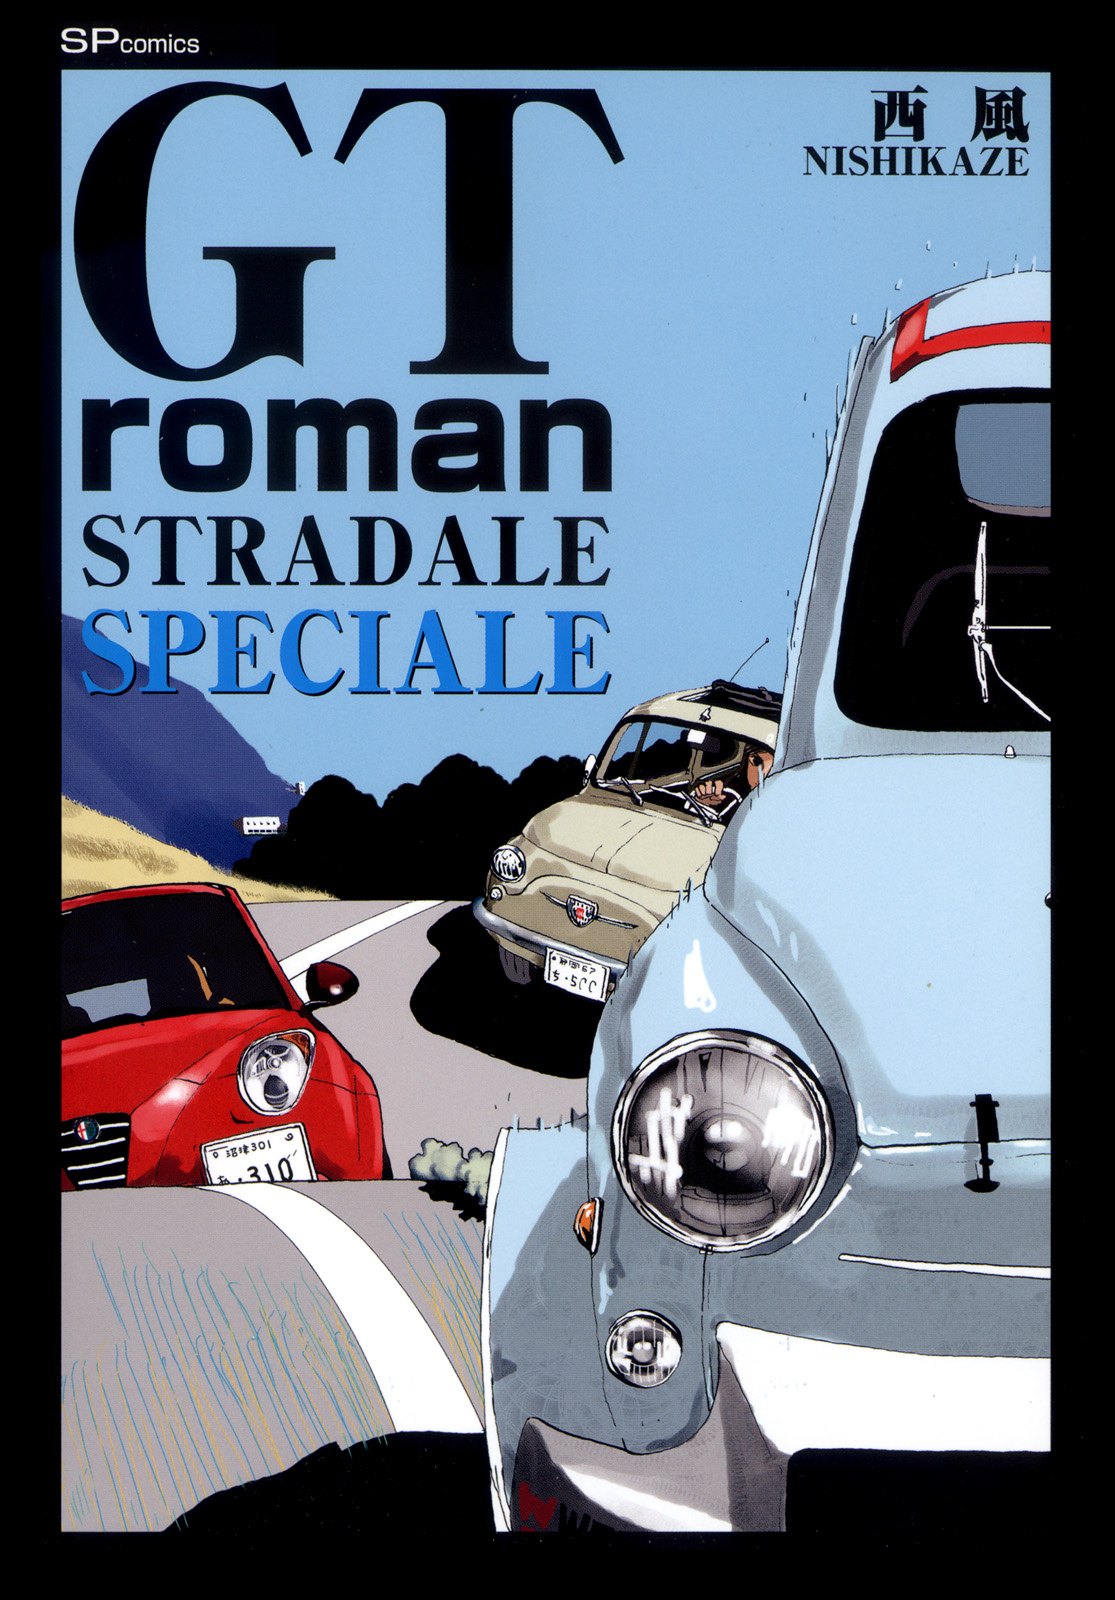 西風 漫画 雑誌 GT roman ロマン STRADALE 他 全29冊 - 青年漫画